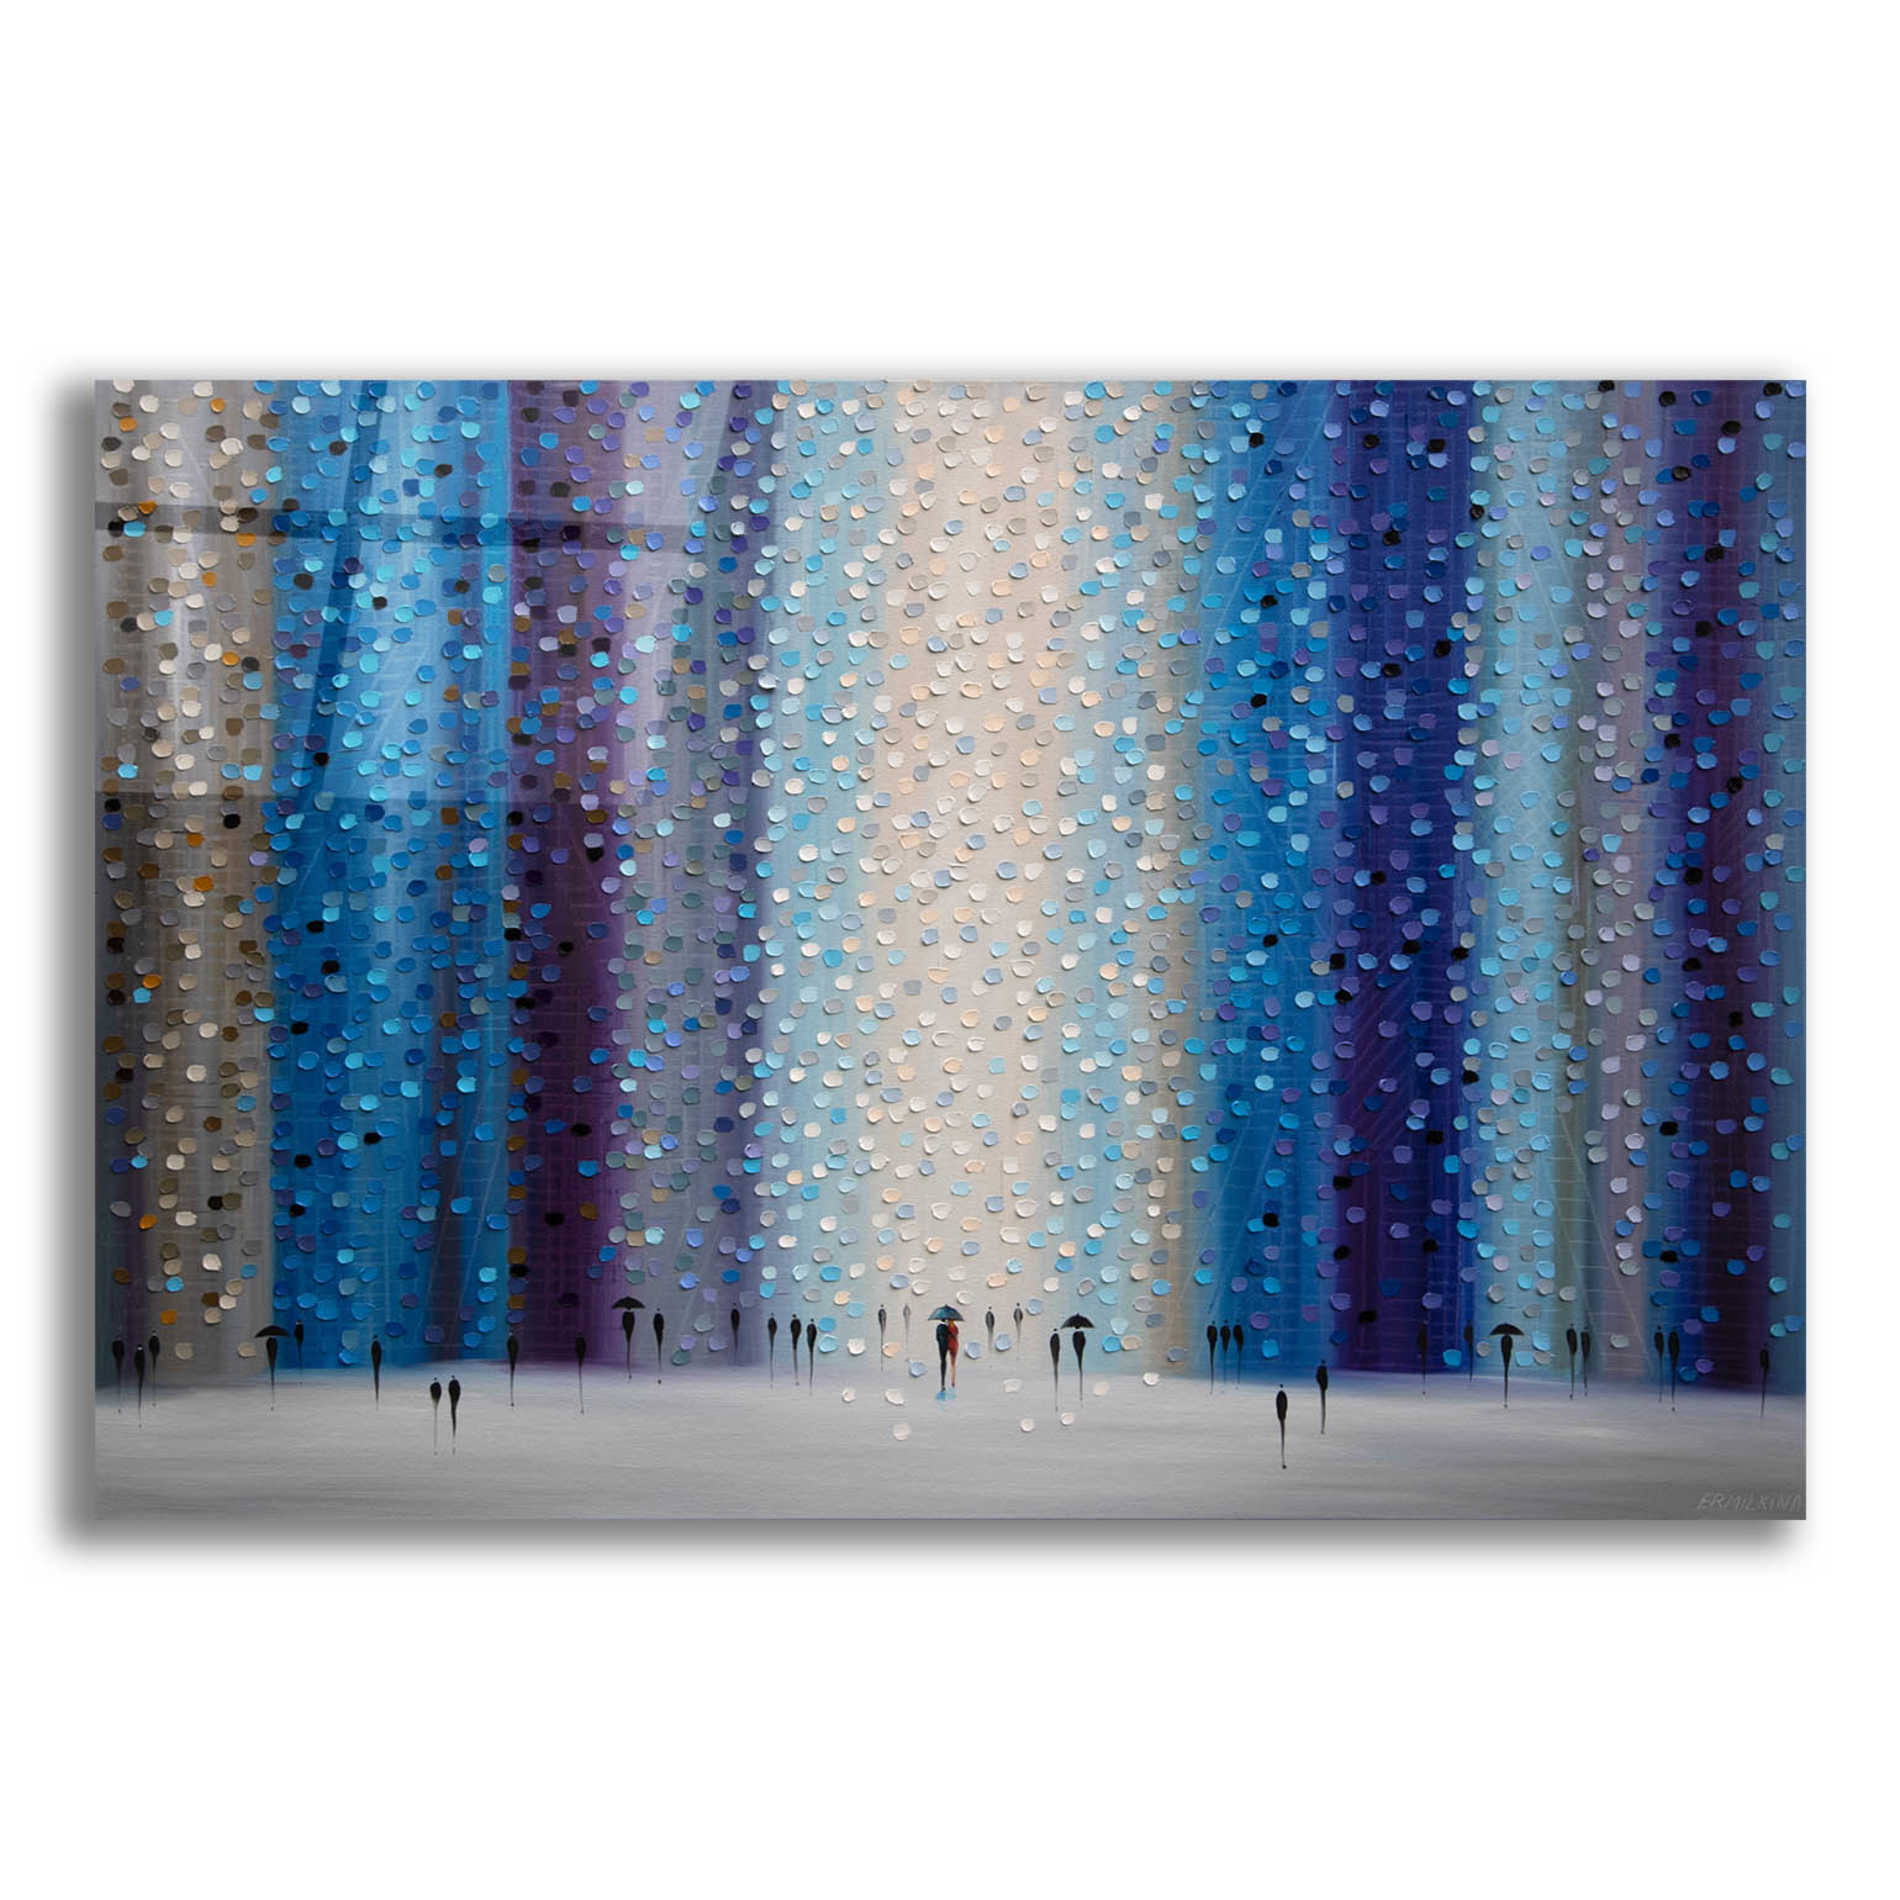 Epic Art 'Rainy City For' by Ekaterina Ermilkina Acrylic Glass Wall Art,16x12